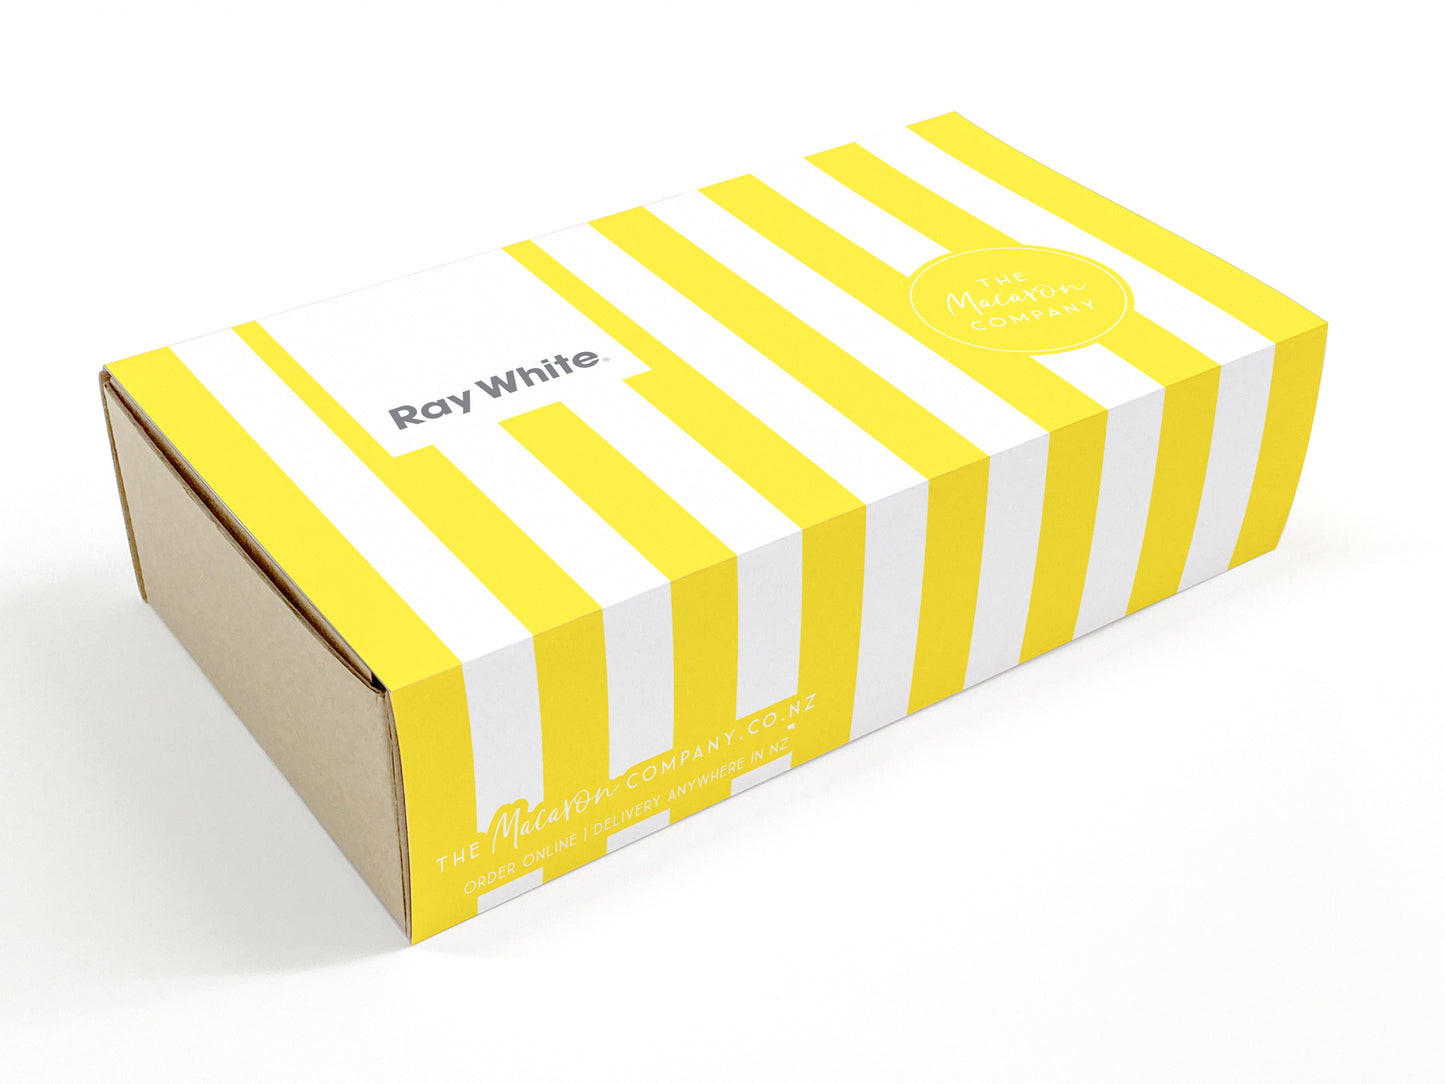 Lemon Macarons 12 Pack with Ray White Box